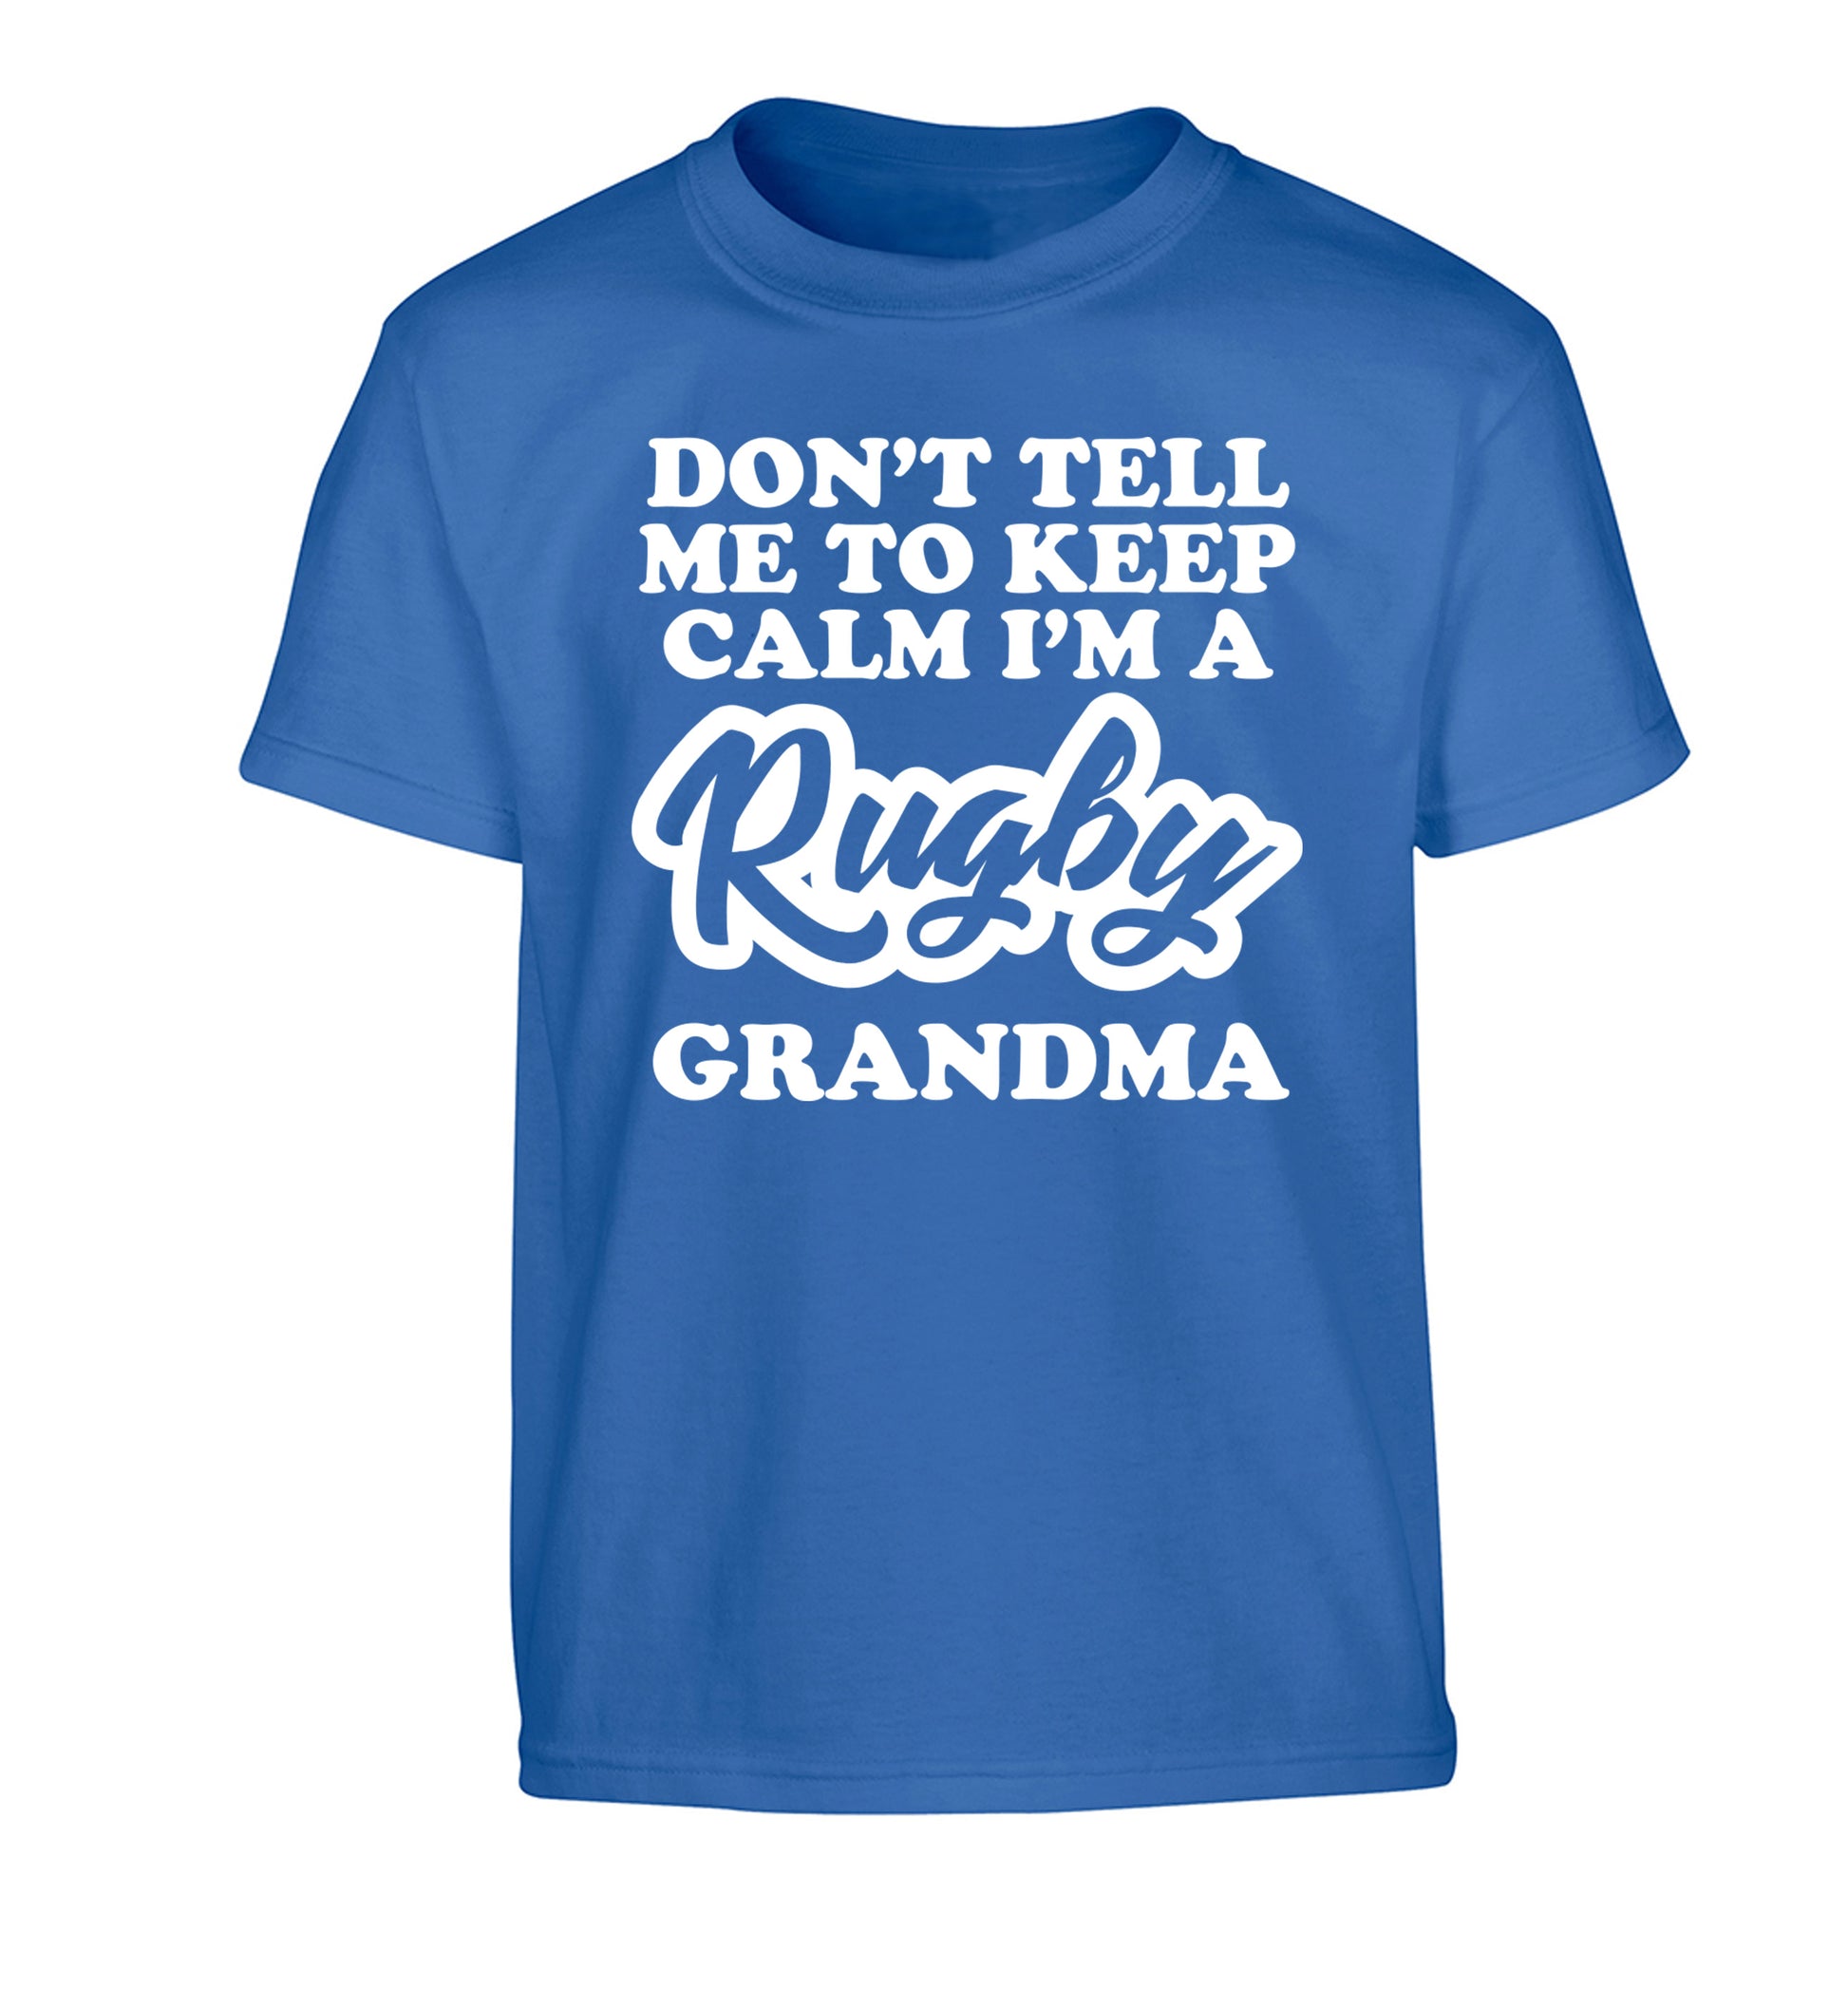 Don't tell me to keep calm I'm a rugby grandma Children's blue Tshirt 12-13 Years